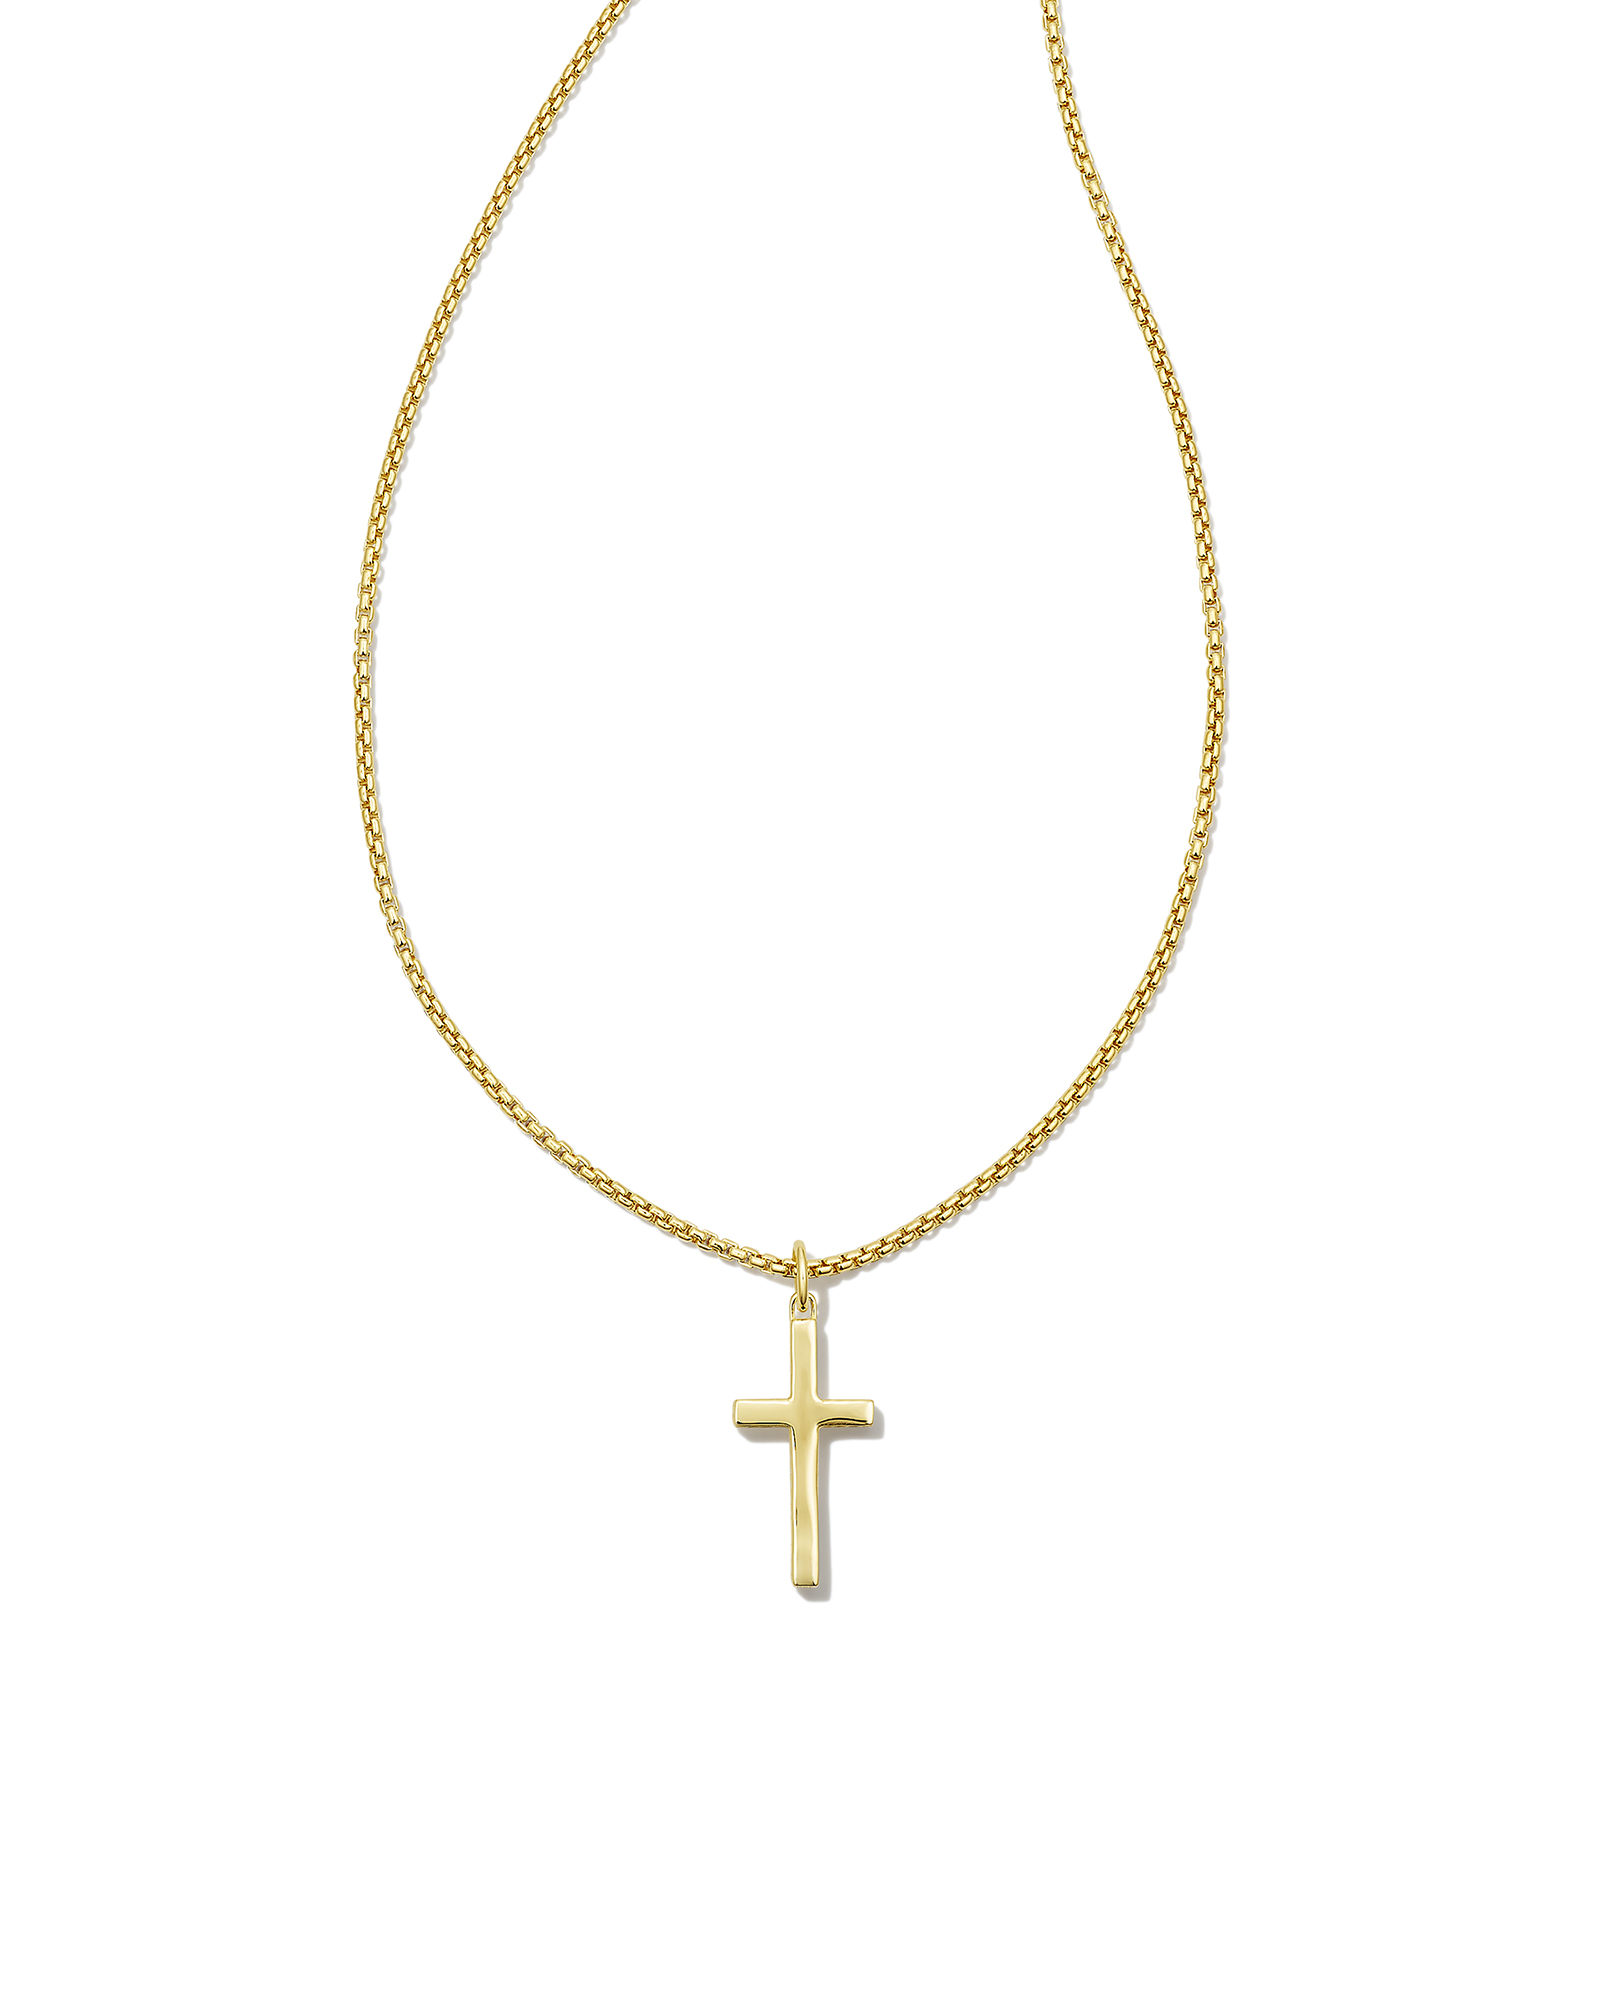 Kendra Scott - Jada Cross Pendant Necklace in Gold at Nordstrom